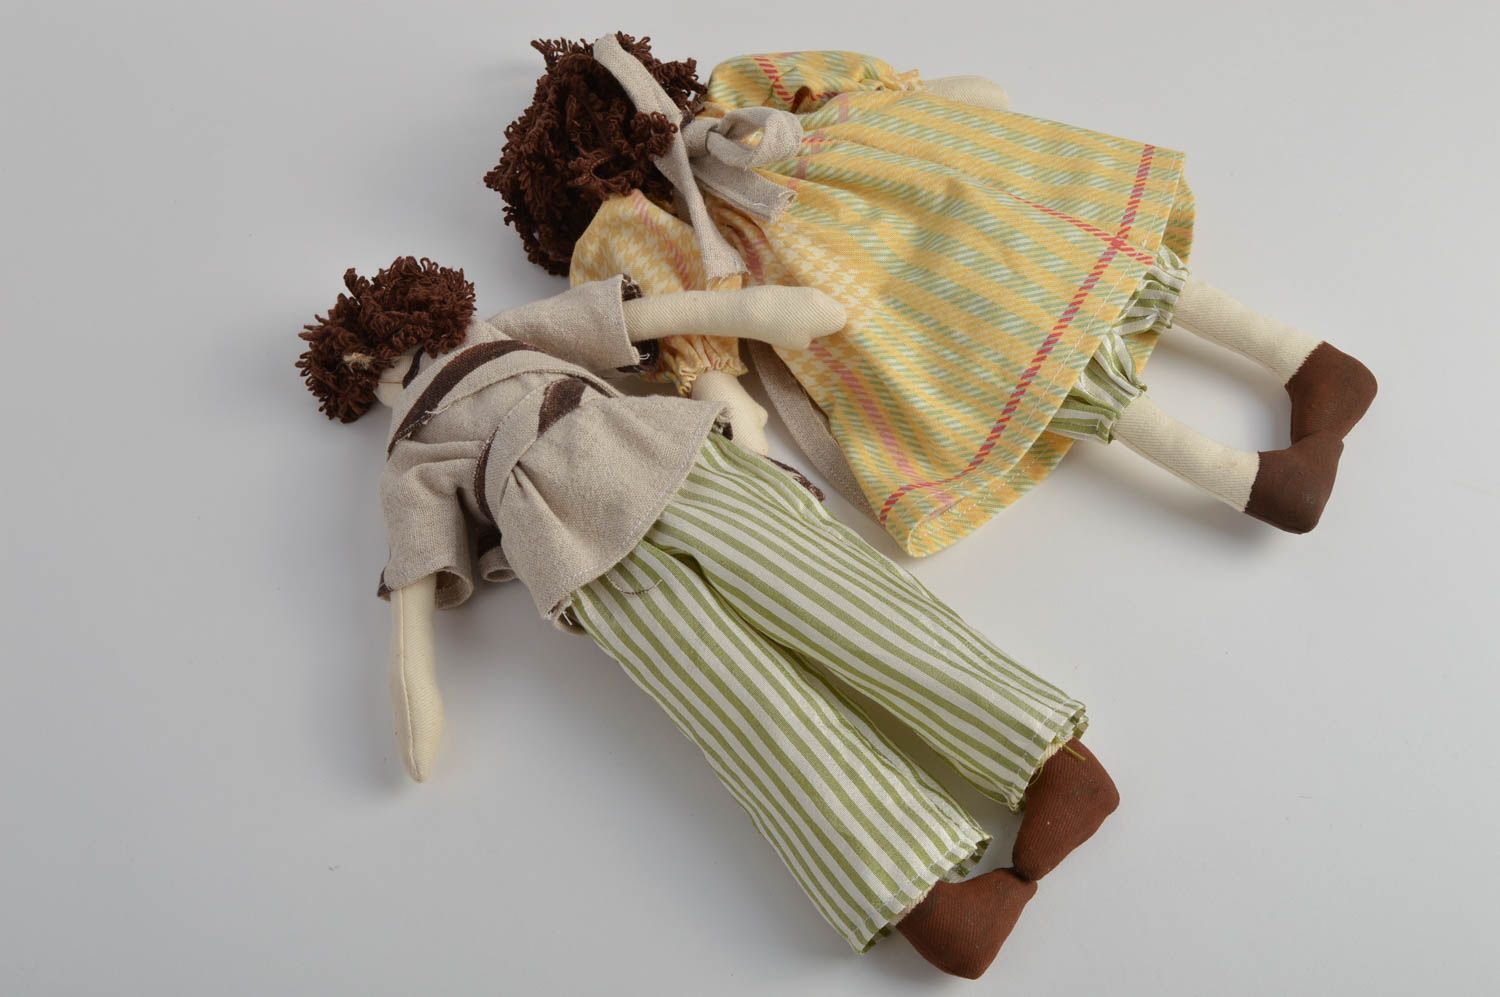 Handmade designer fabric soft dolls boy and girl for interior decor and children photo 5